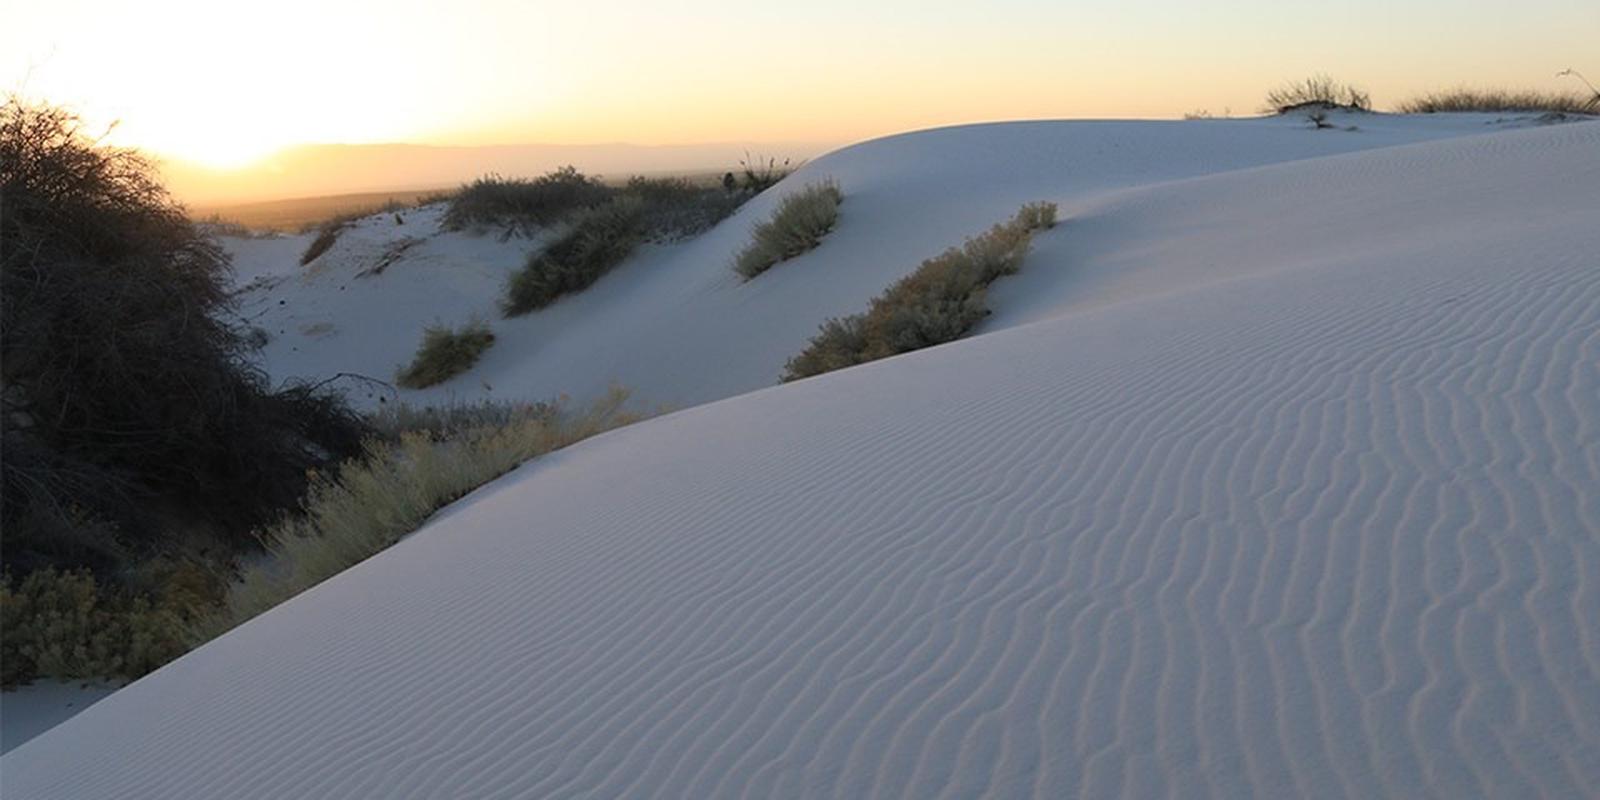 The gypsum dunes at sunrise.